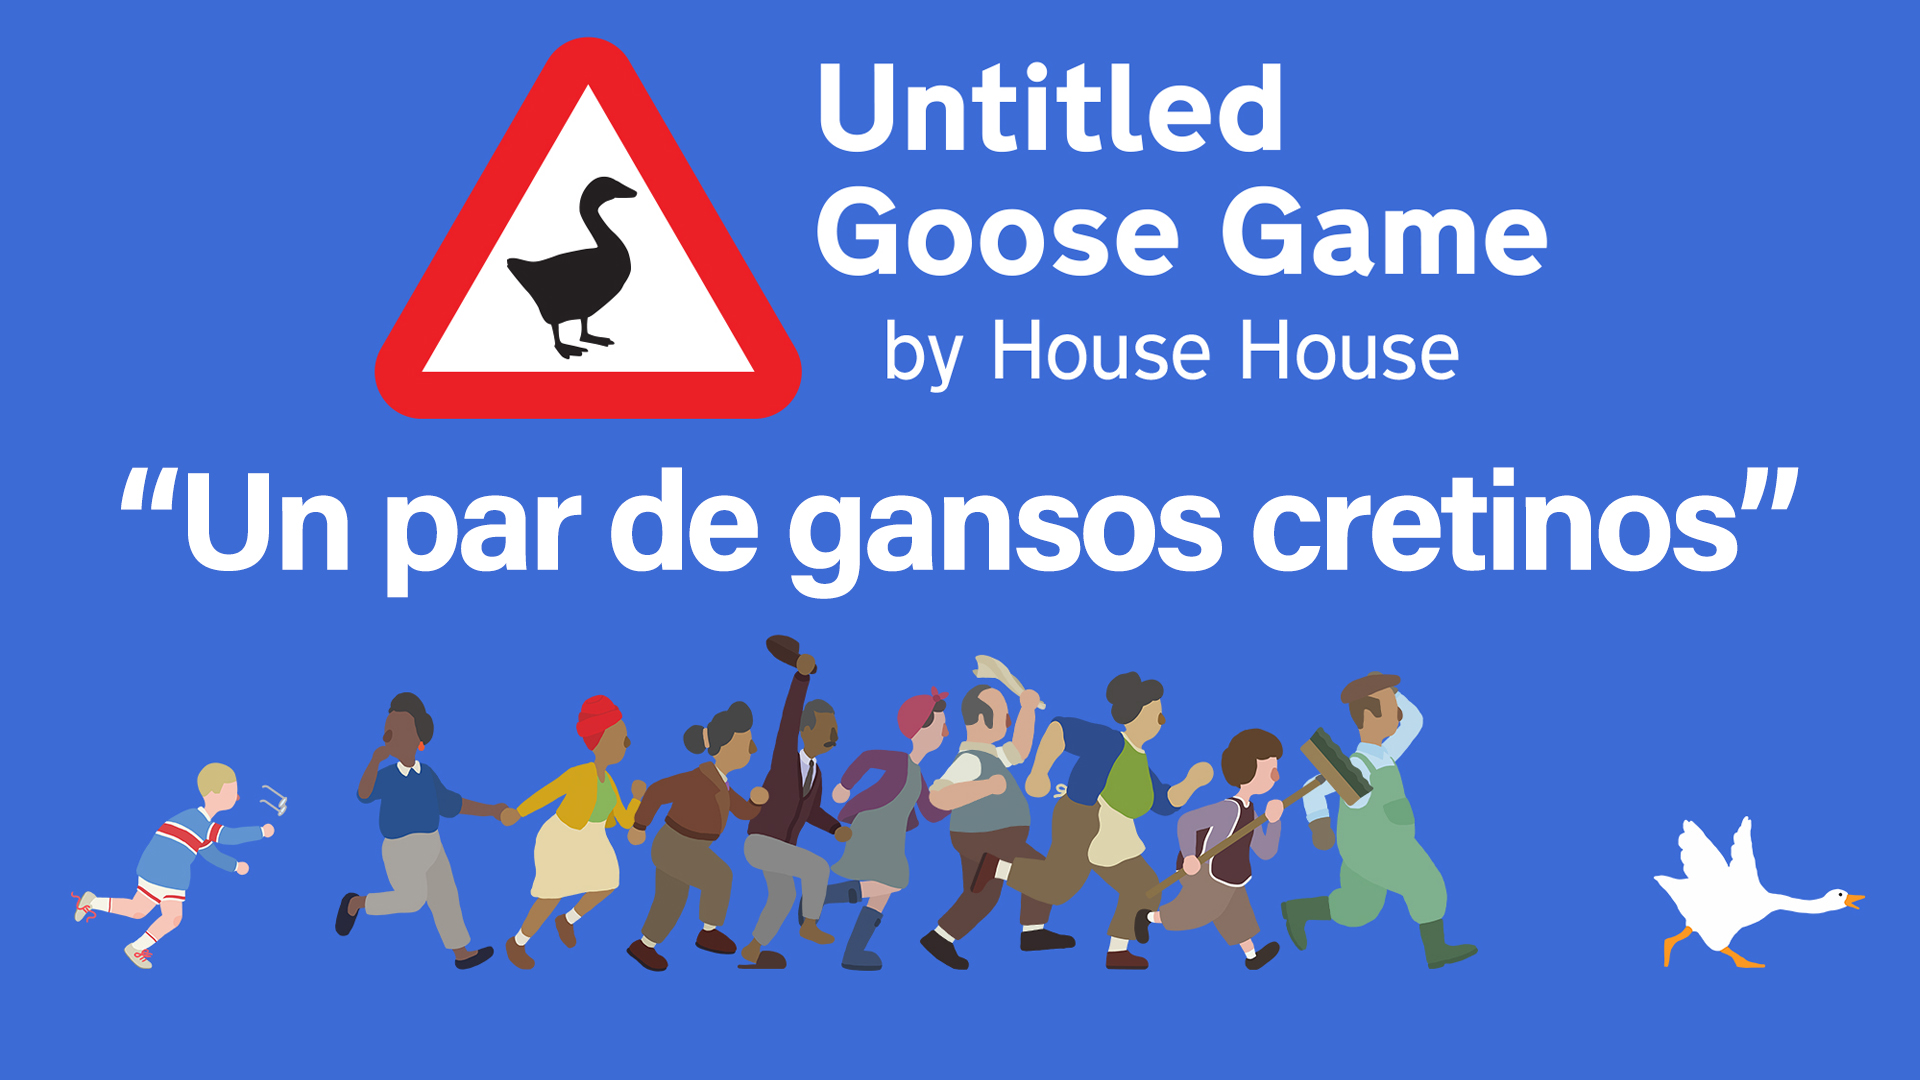 Untitled Goose Game – Un Par de Gansos Crétinos